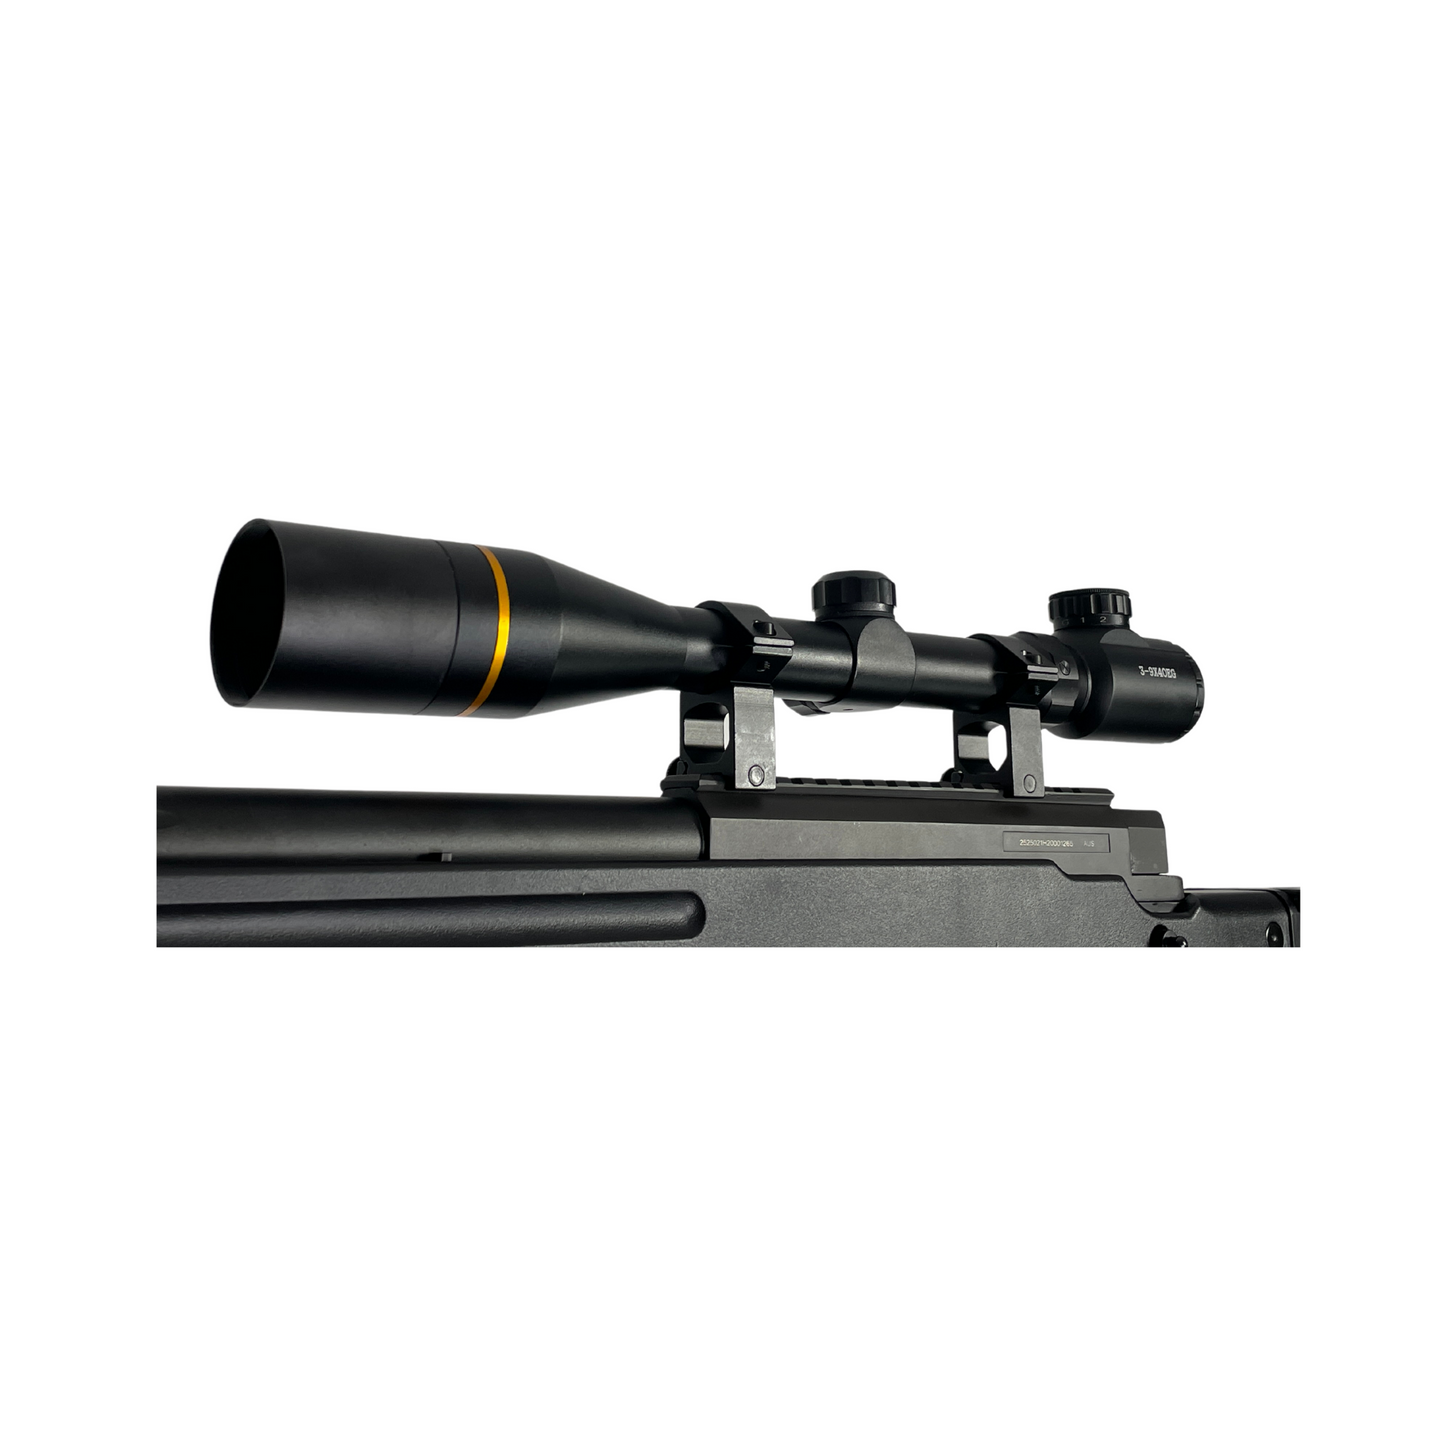 MB08 AWM Tactical Metal Sniper Rifle